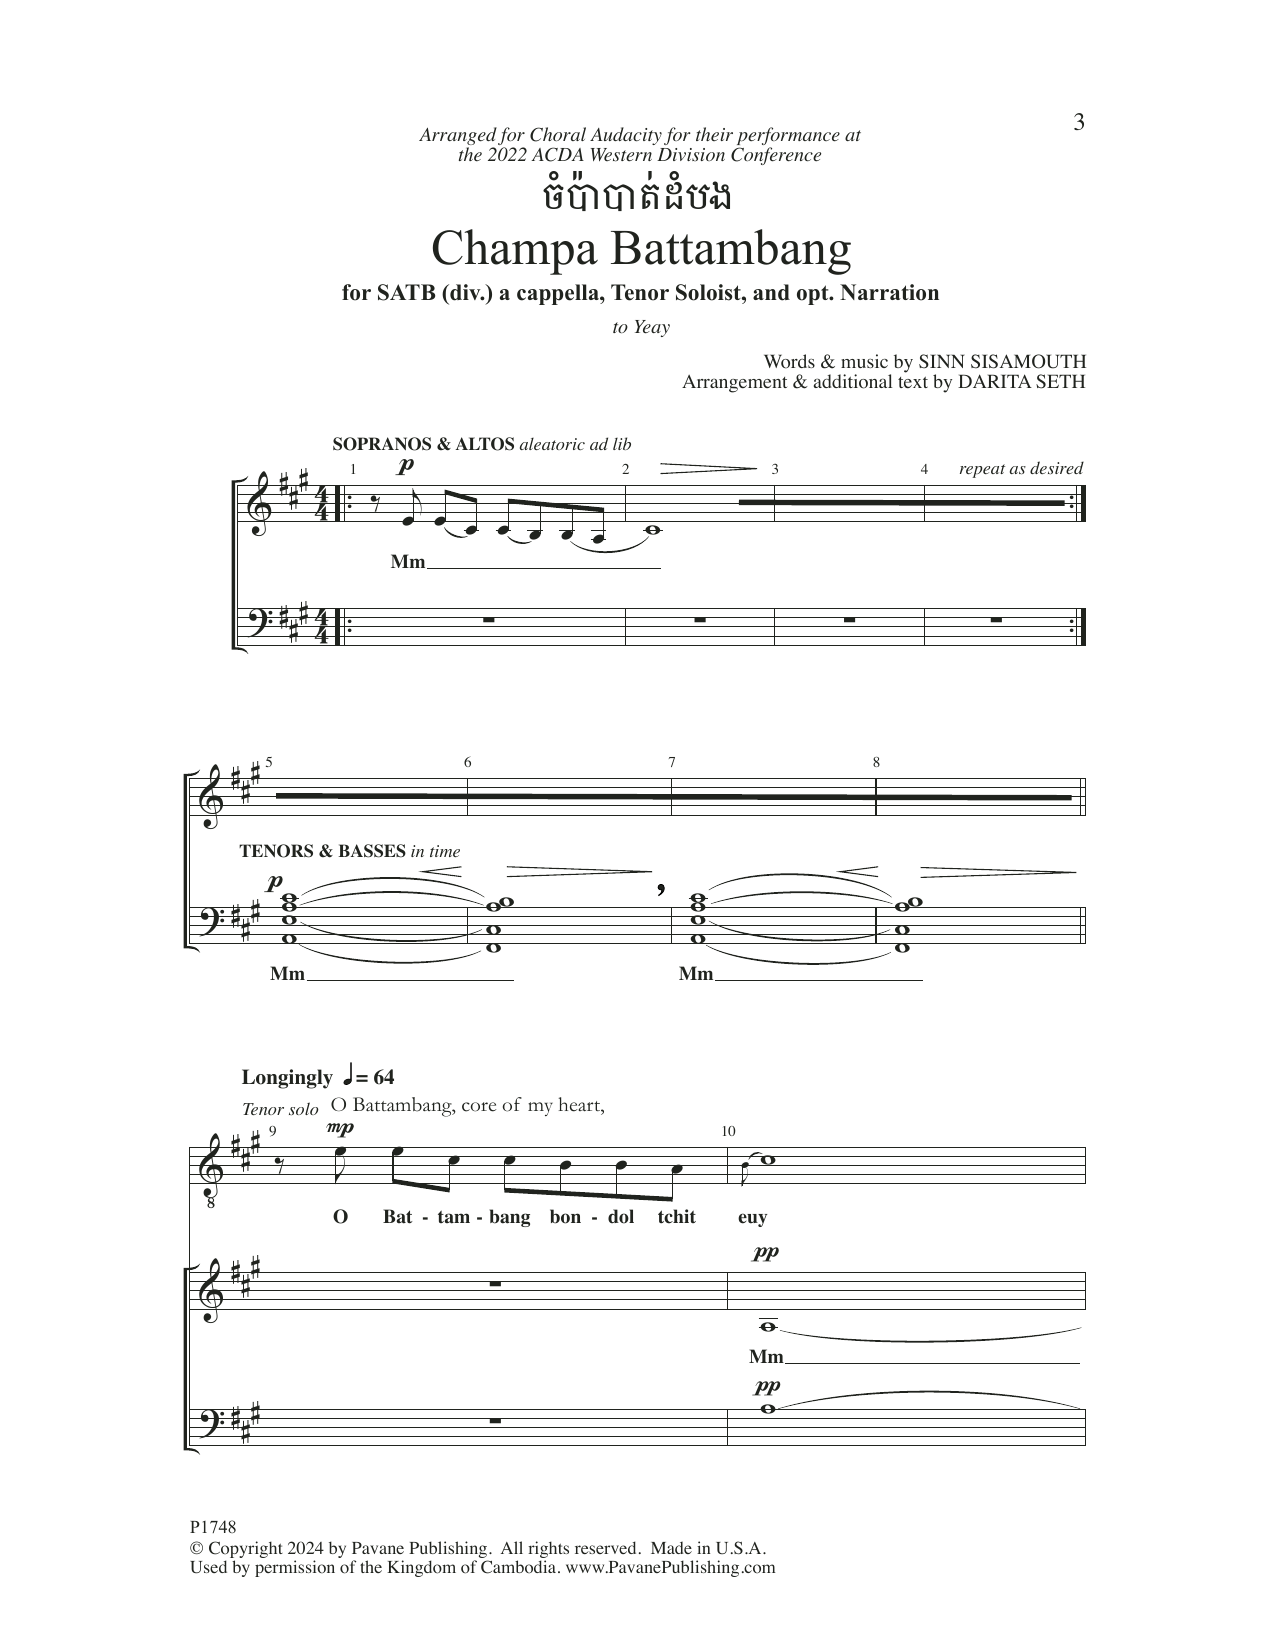 Sinn Sisamouth Champa Battambang (arr. Darita Seth) Sheet Music Notes & Chords for SATB Choir - Download or Print PDF